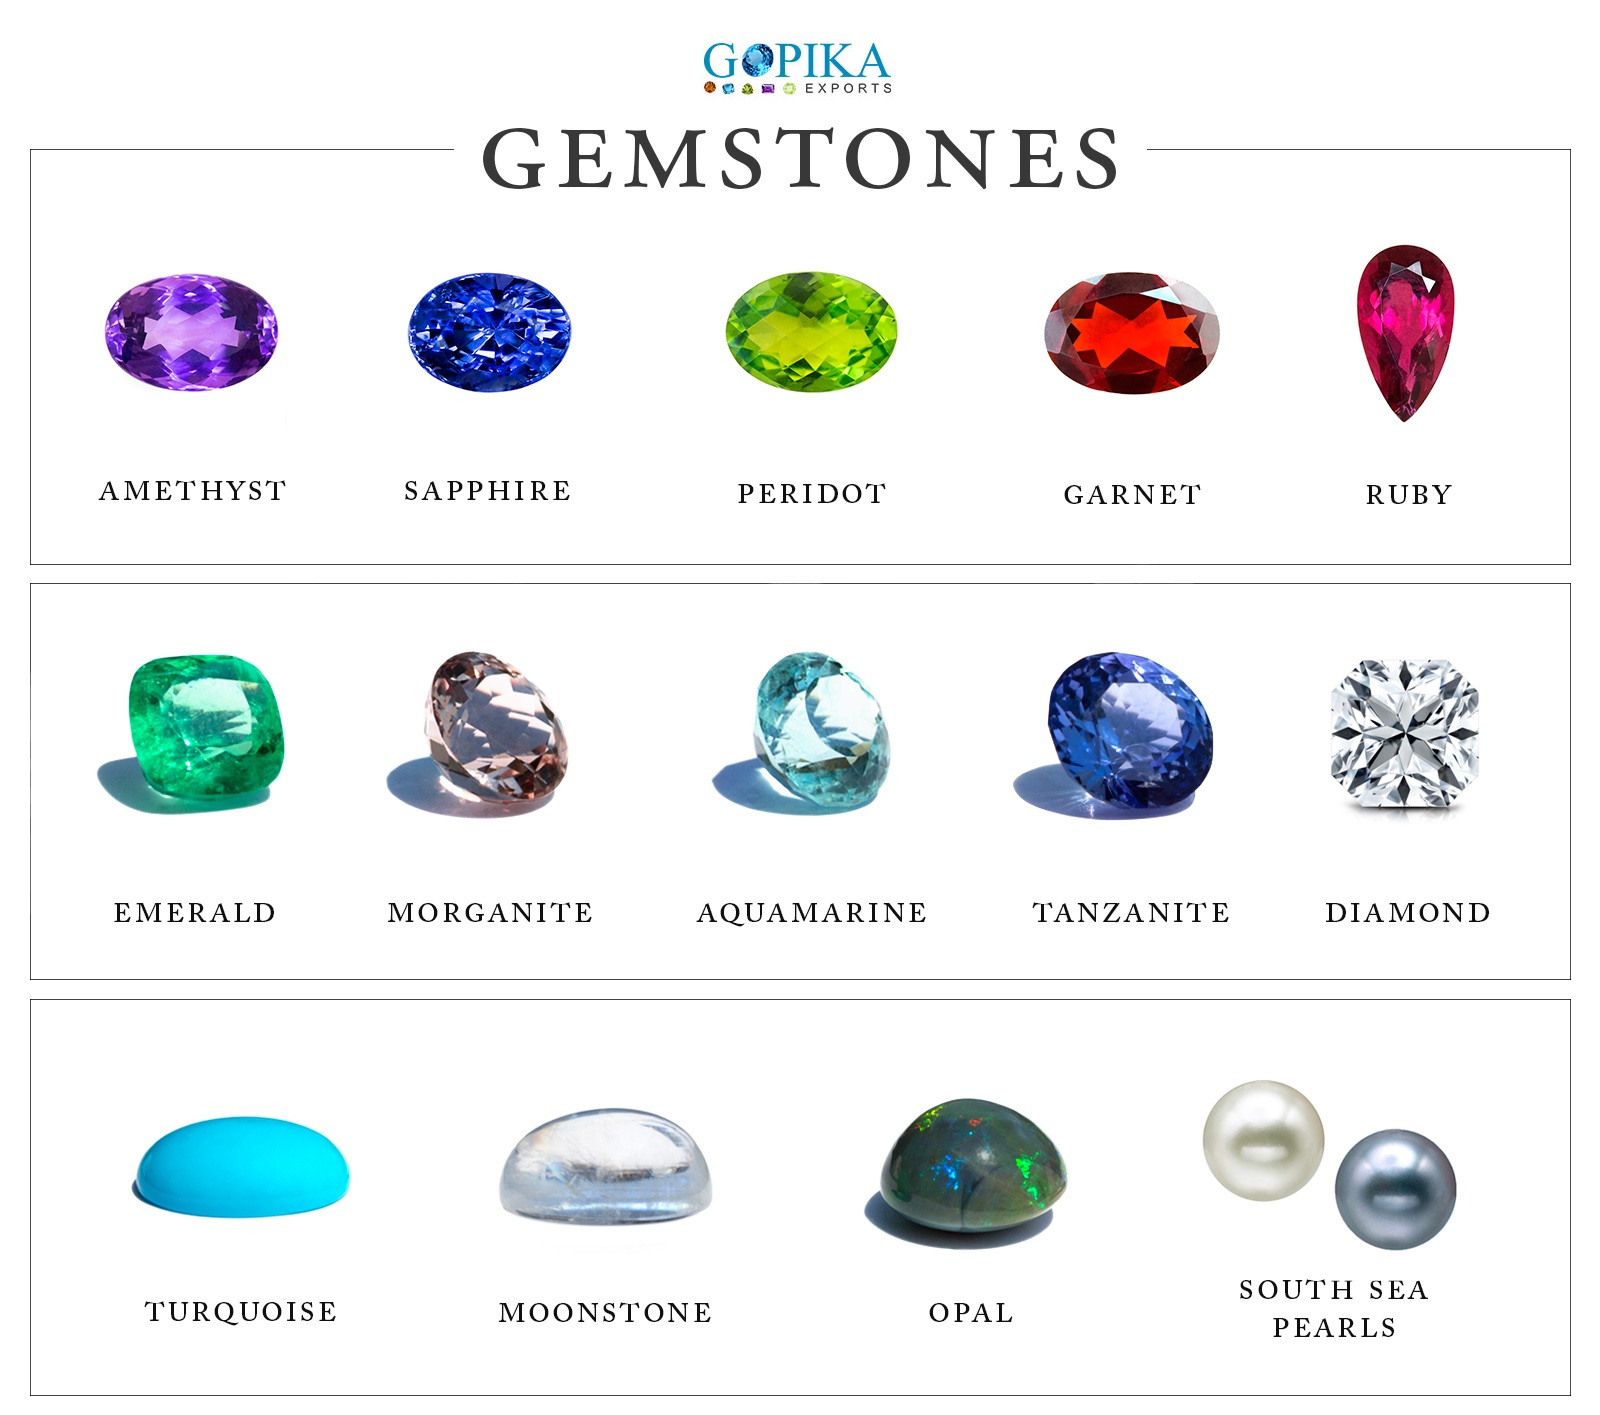 Wholesale Gemstones Online at Best Prices On Gopika ExportsFashion and JewelleryJewelry AccessoriesWest DelhiOther